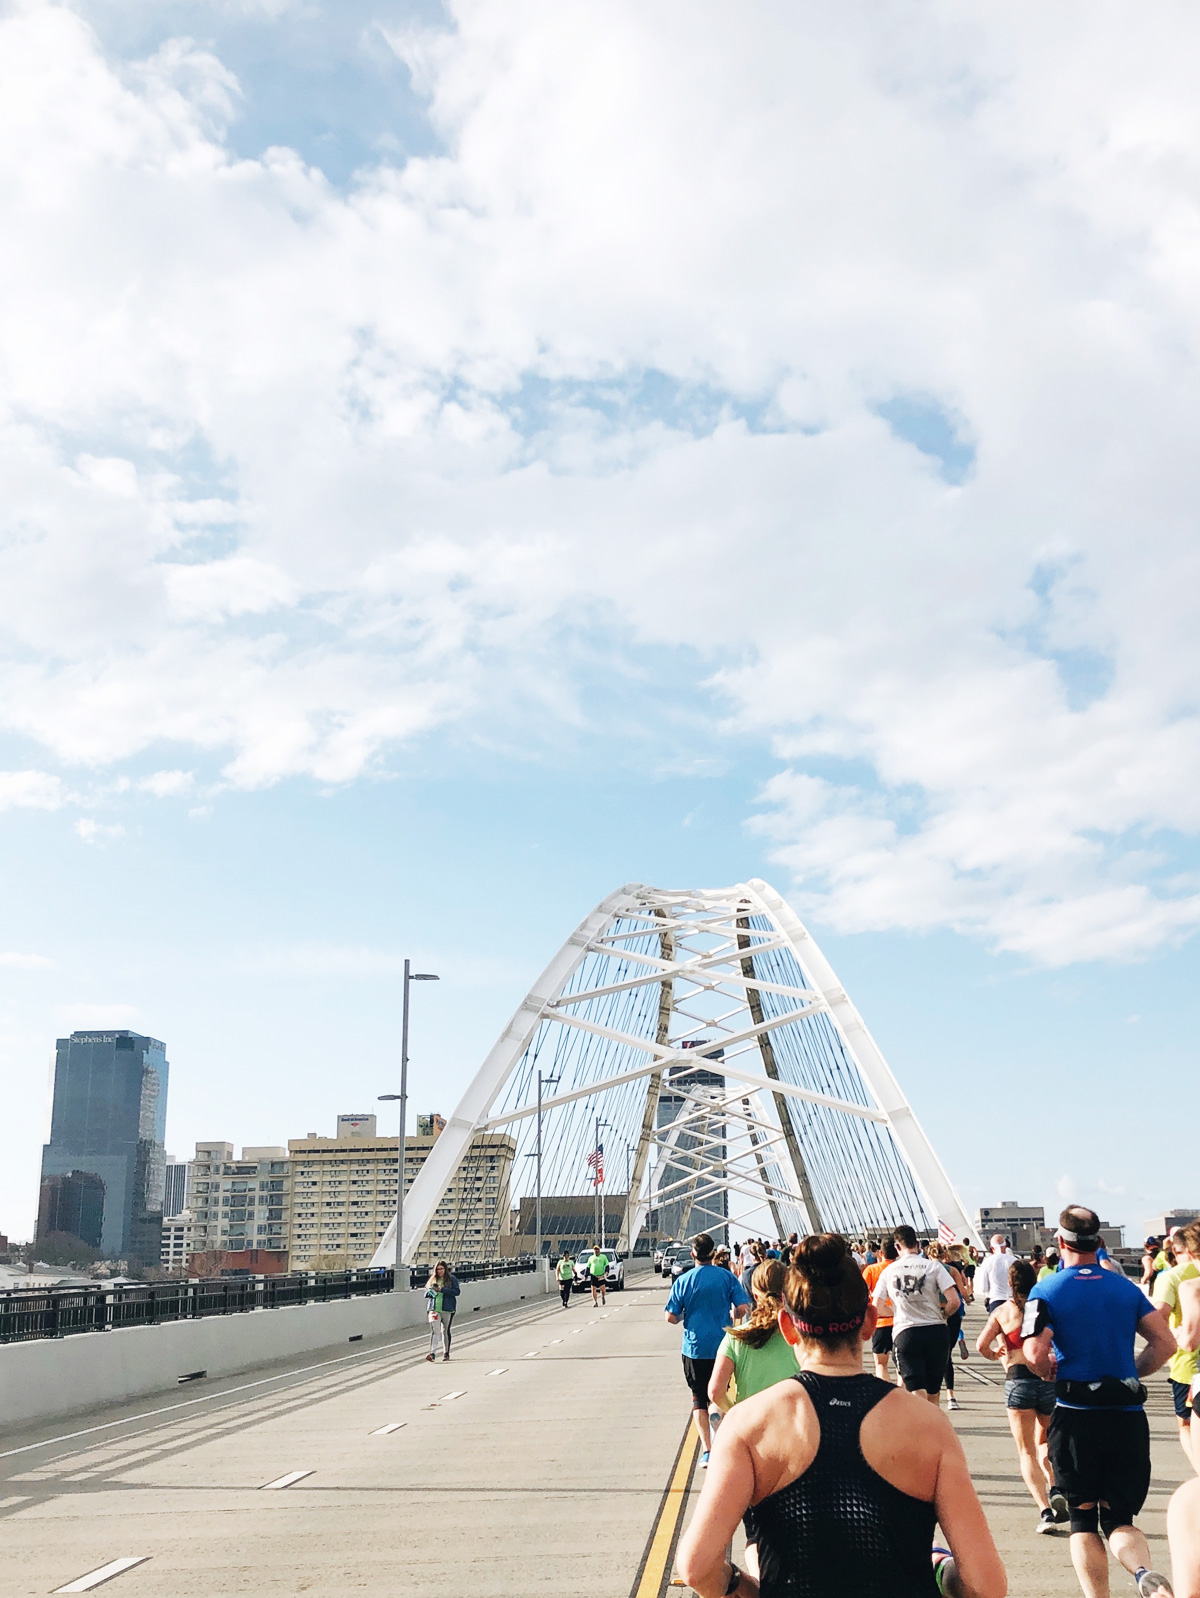 Race runners on a city bridge